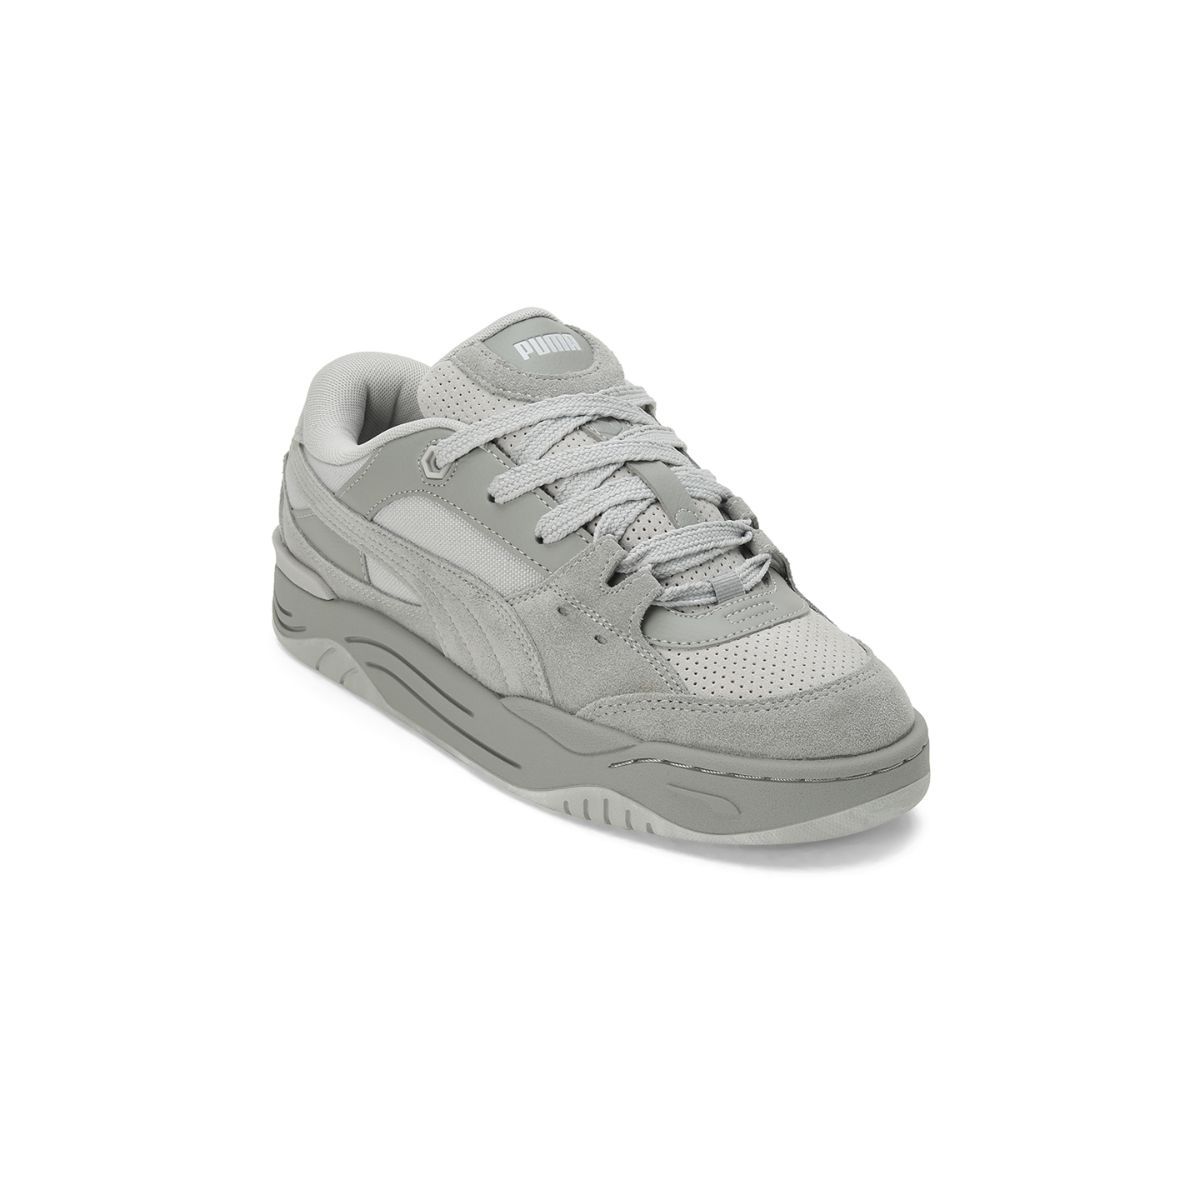 New Balance 530 sneakers in gray | ASOS